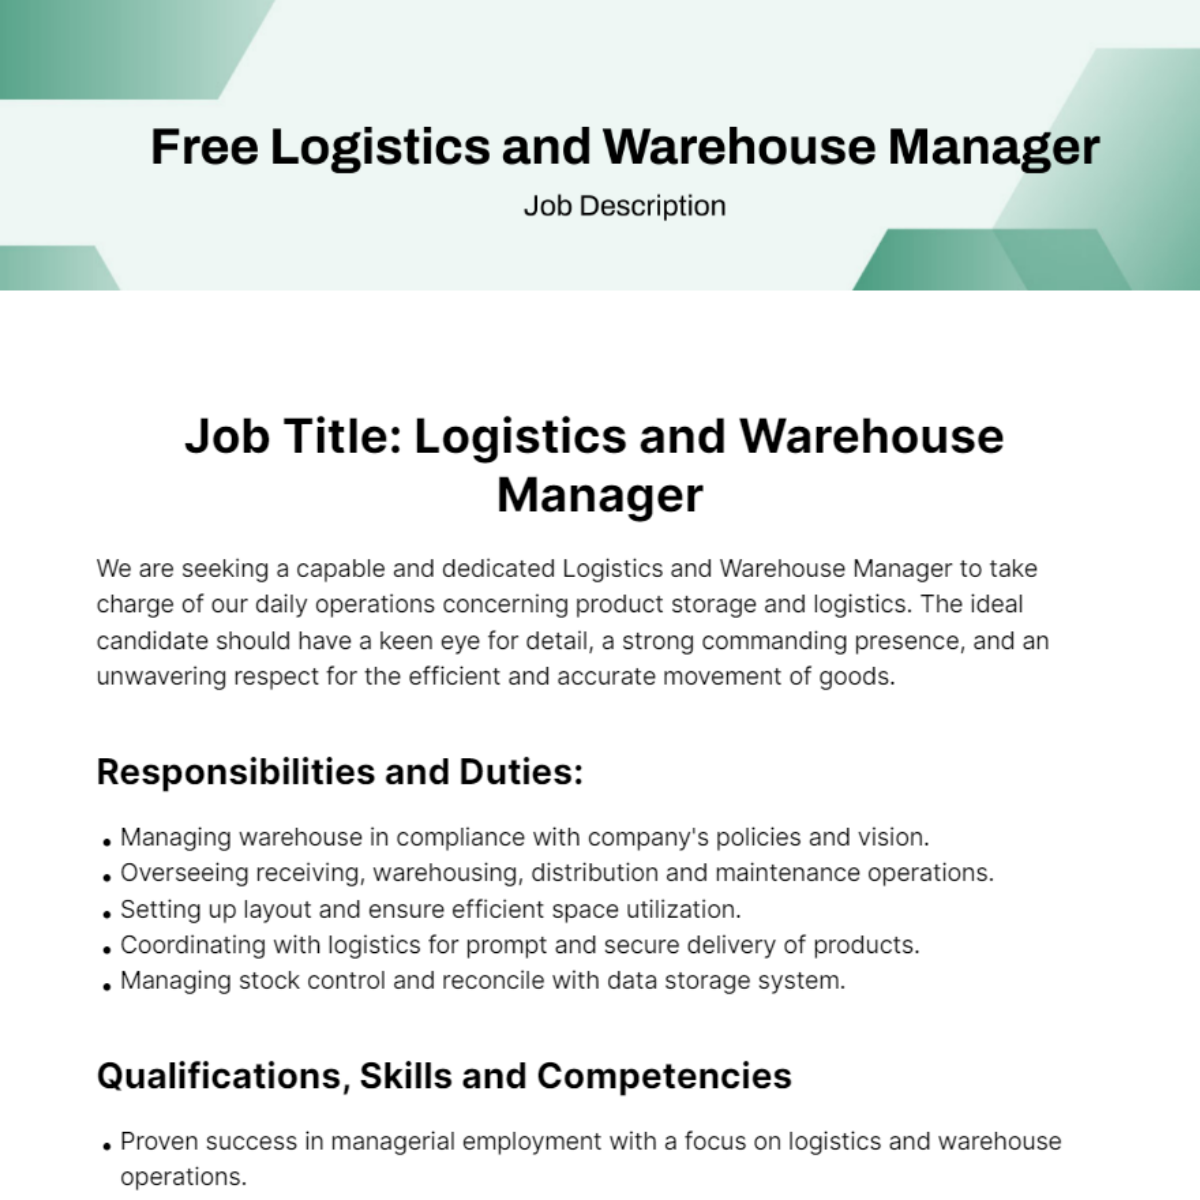 Free Logistics and Warehouse Manager Job Description Template